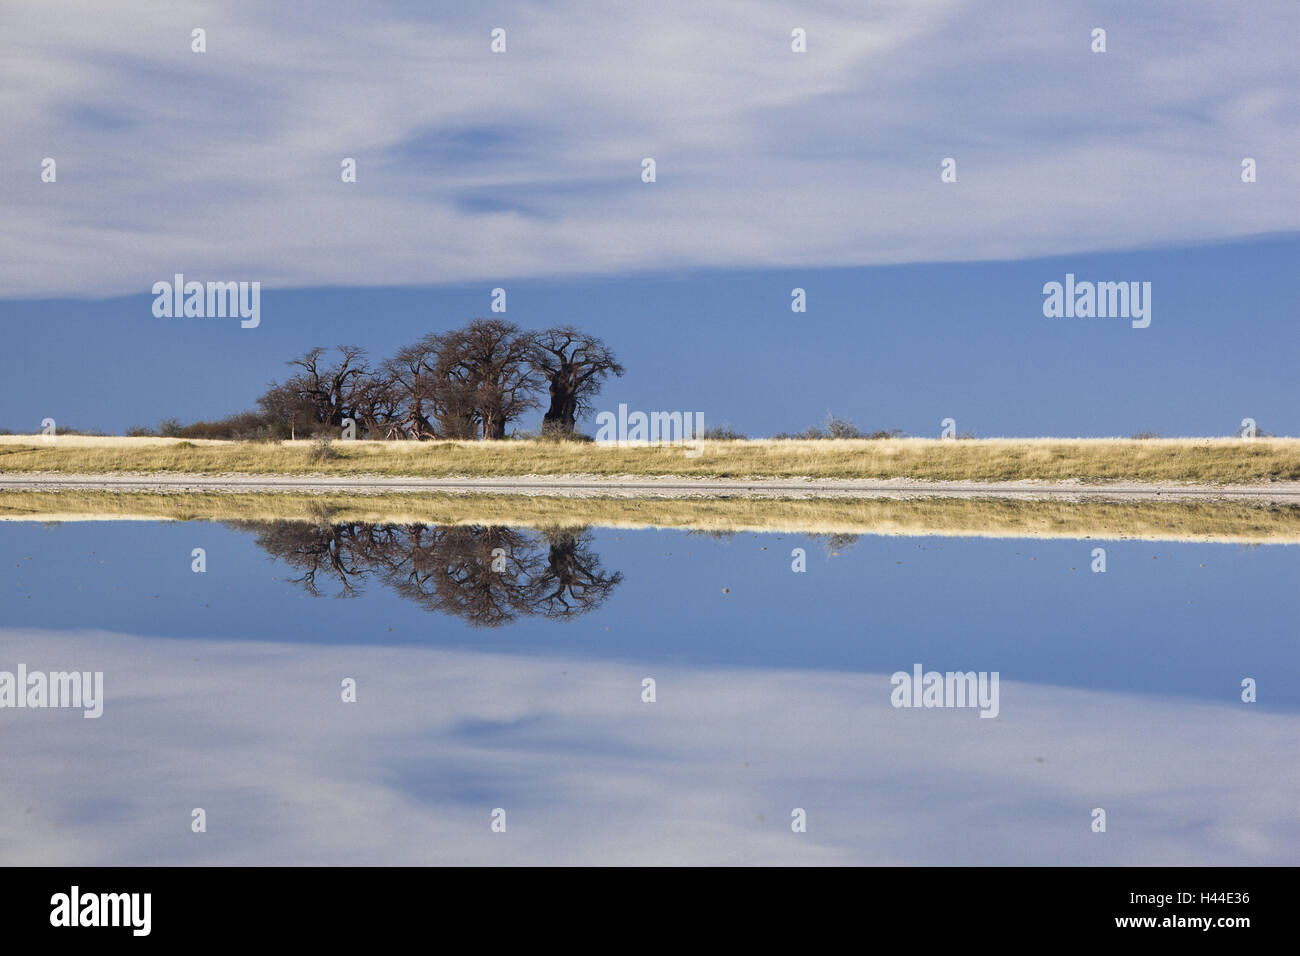 África, Botswana, distrito del noroeste, parque nacional Nxai-Pan Baines-Baobabs, Adansonia digitata, agua, mirroring Foto de stock